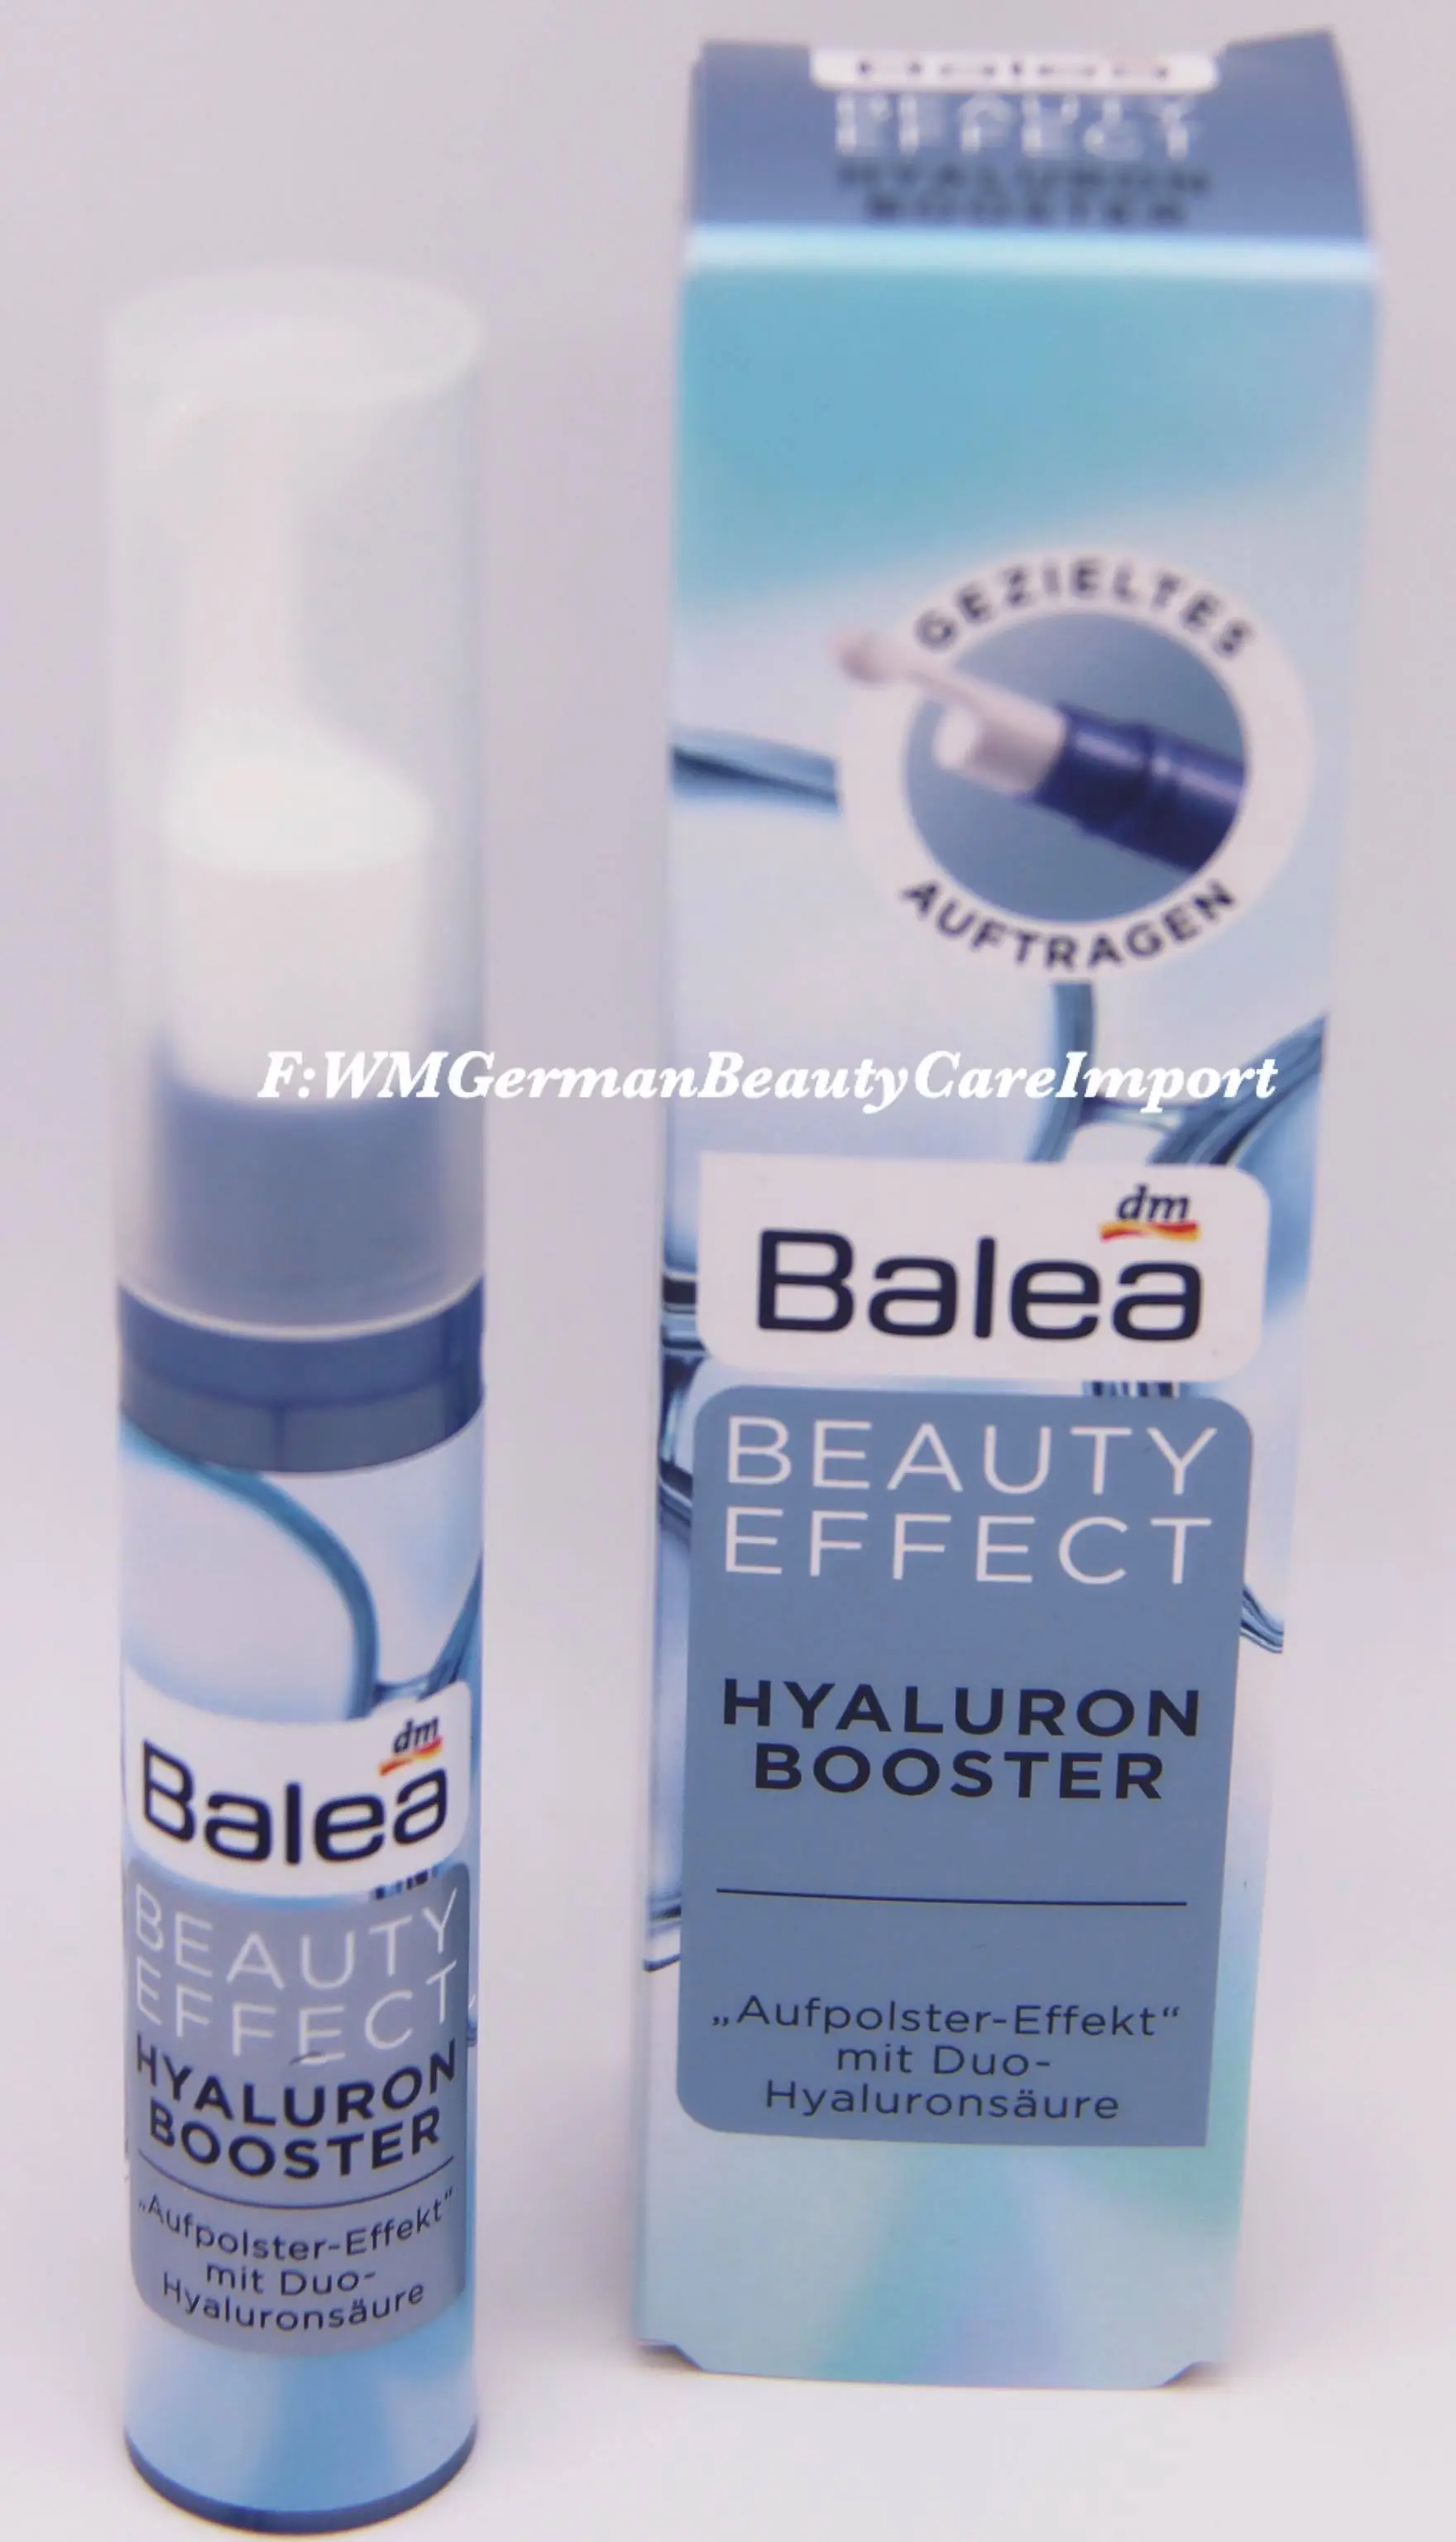 Exp.2022 เซรั่มไฮยาลูรอน บูสเตอร์ 3 เท่า ลดเลือนริ้วรอยเหี่ยวย่น บริเวณหางตา ร่องแก้ม ริมฝีปาก Balea Beauty Effect Hyaluron Booster 10 ml จากเยอรมัน